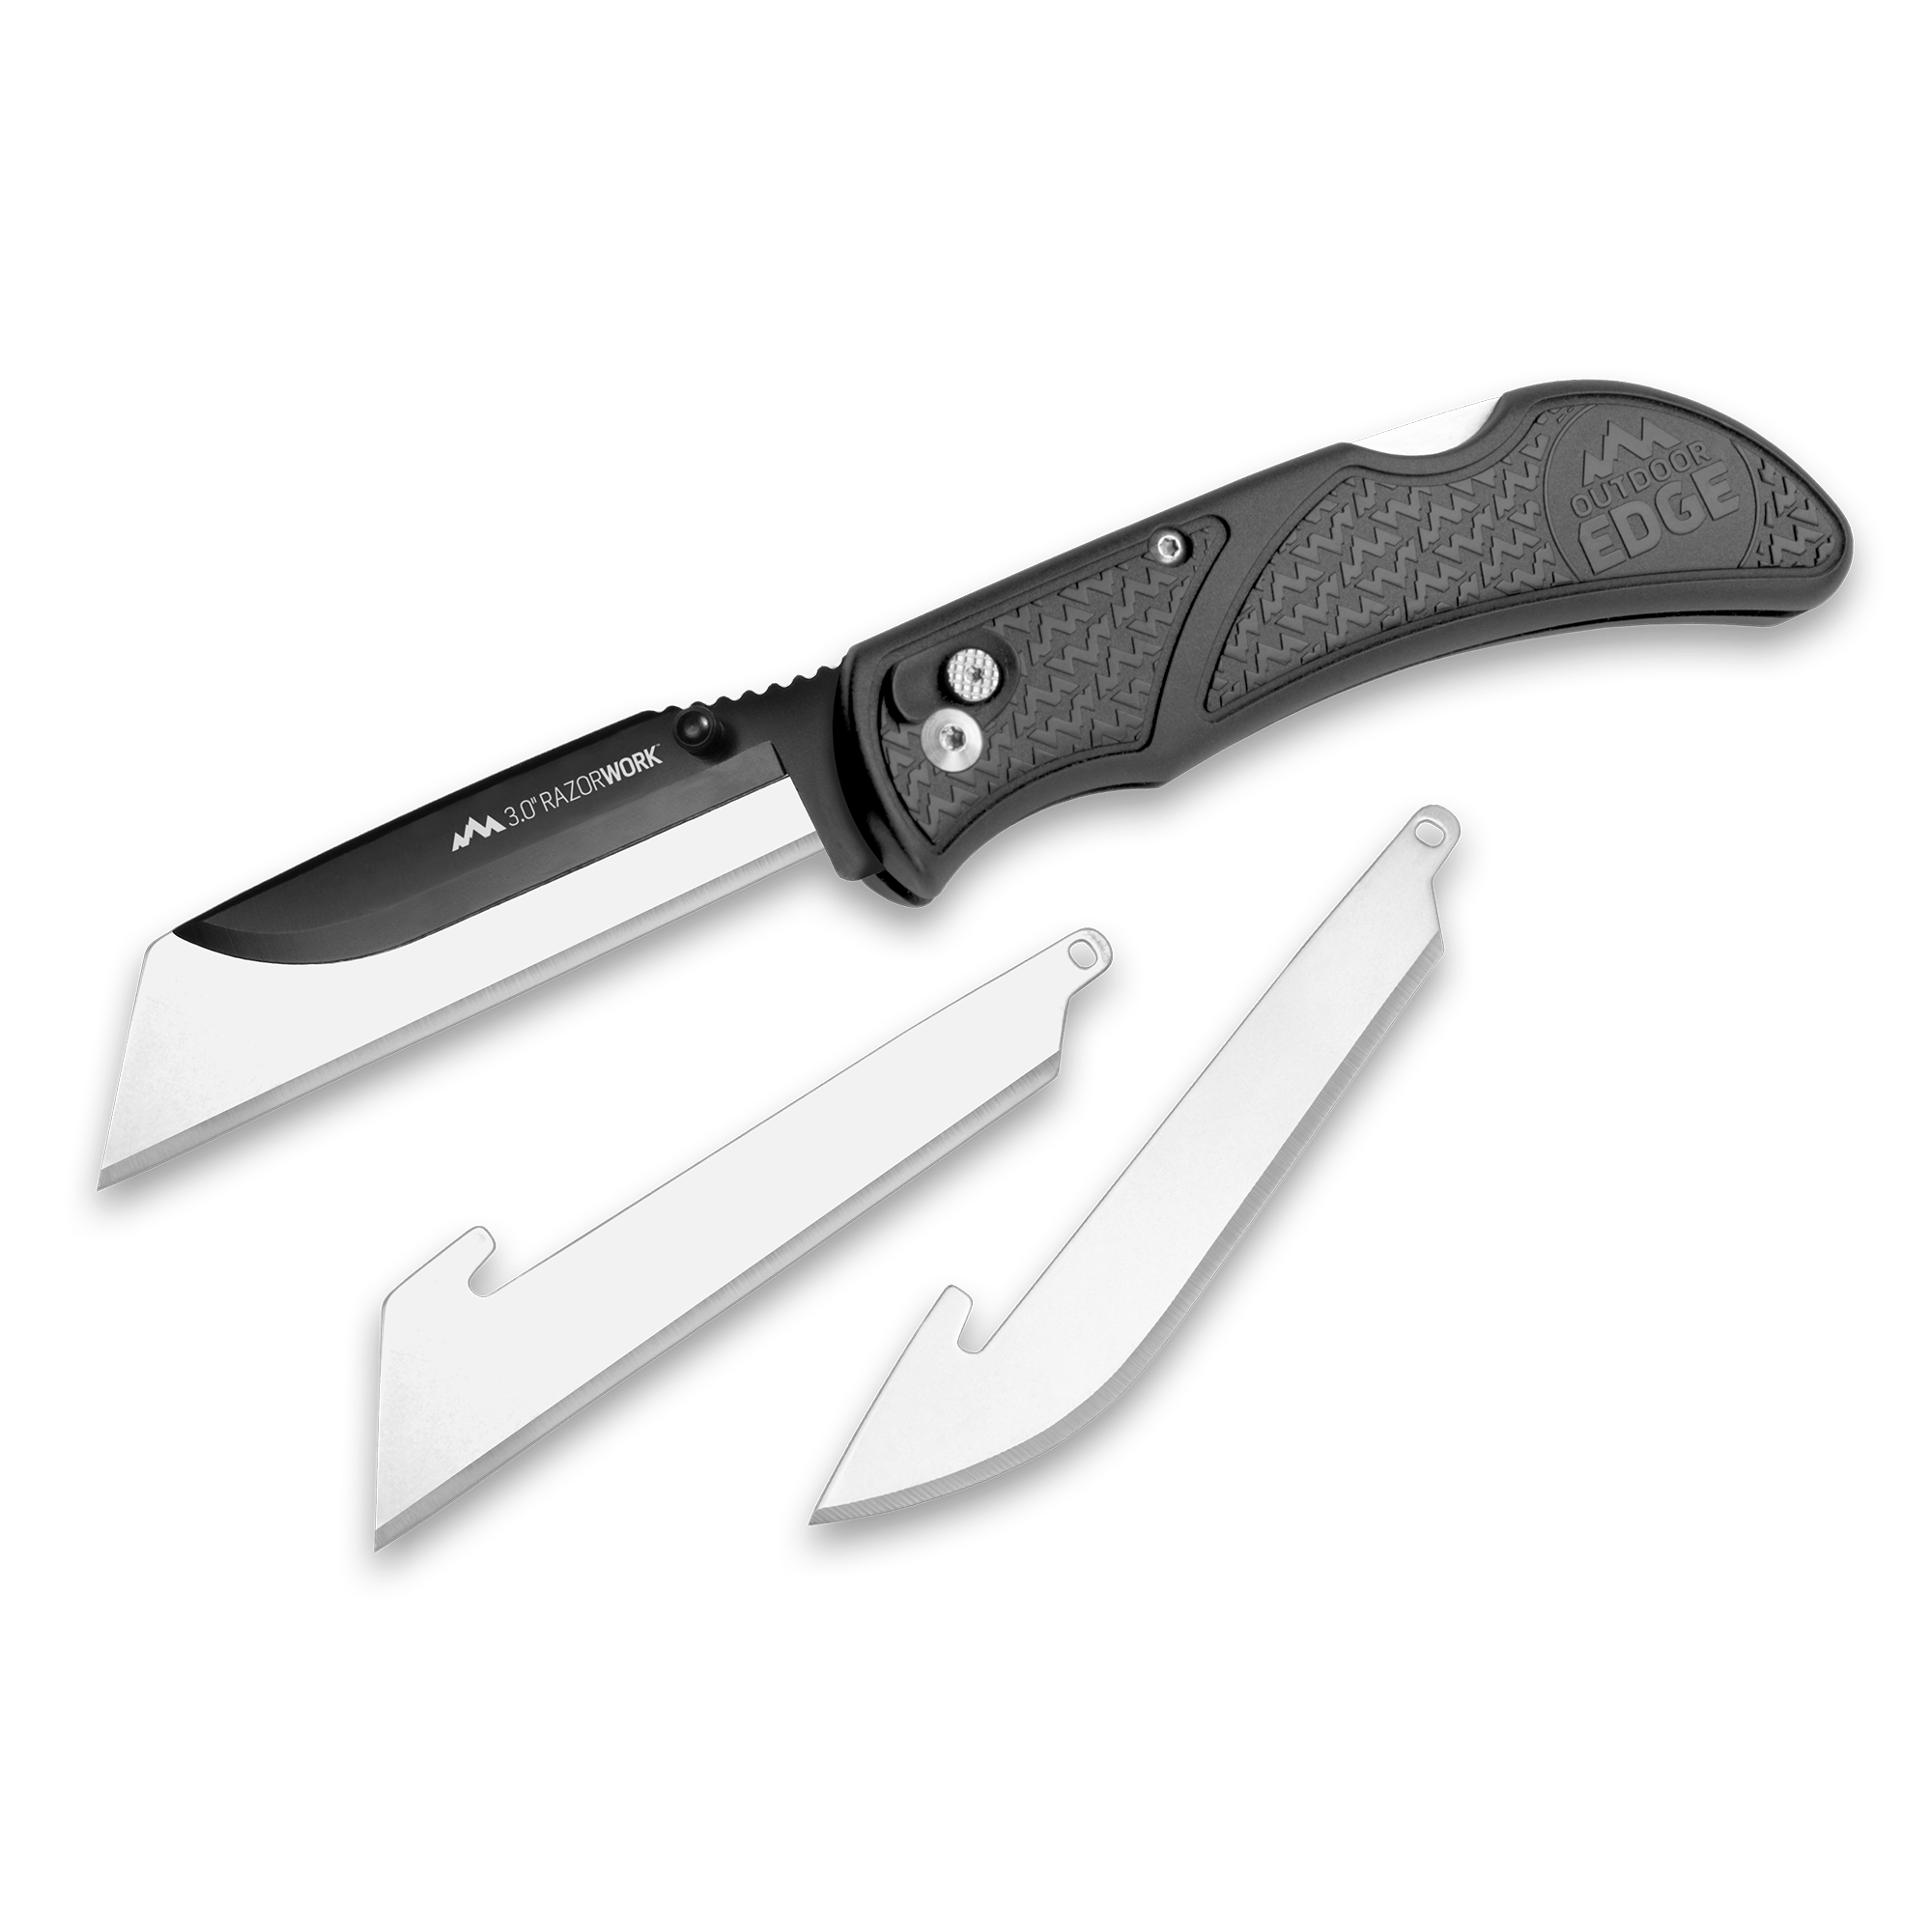 Buy High End Folding Knives